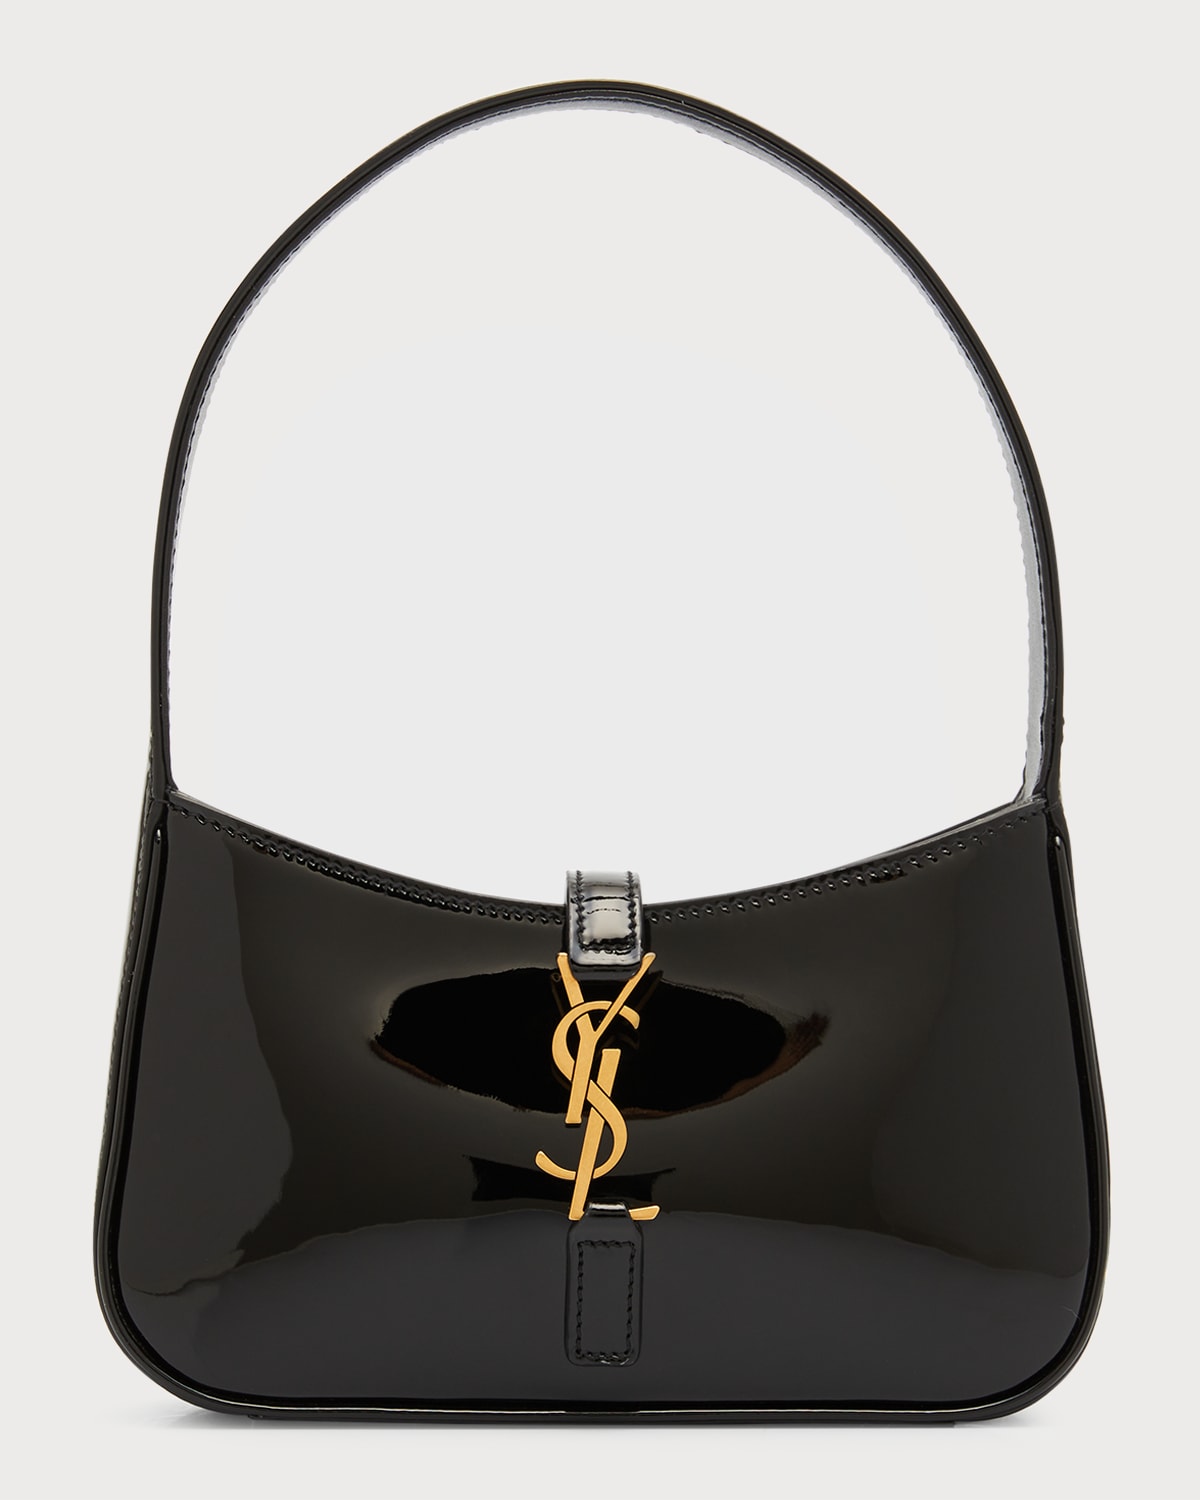 Calypso Patent Leather Shoulder Bag in Black - Saint Laurent